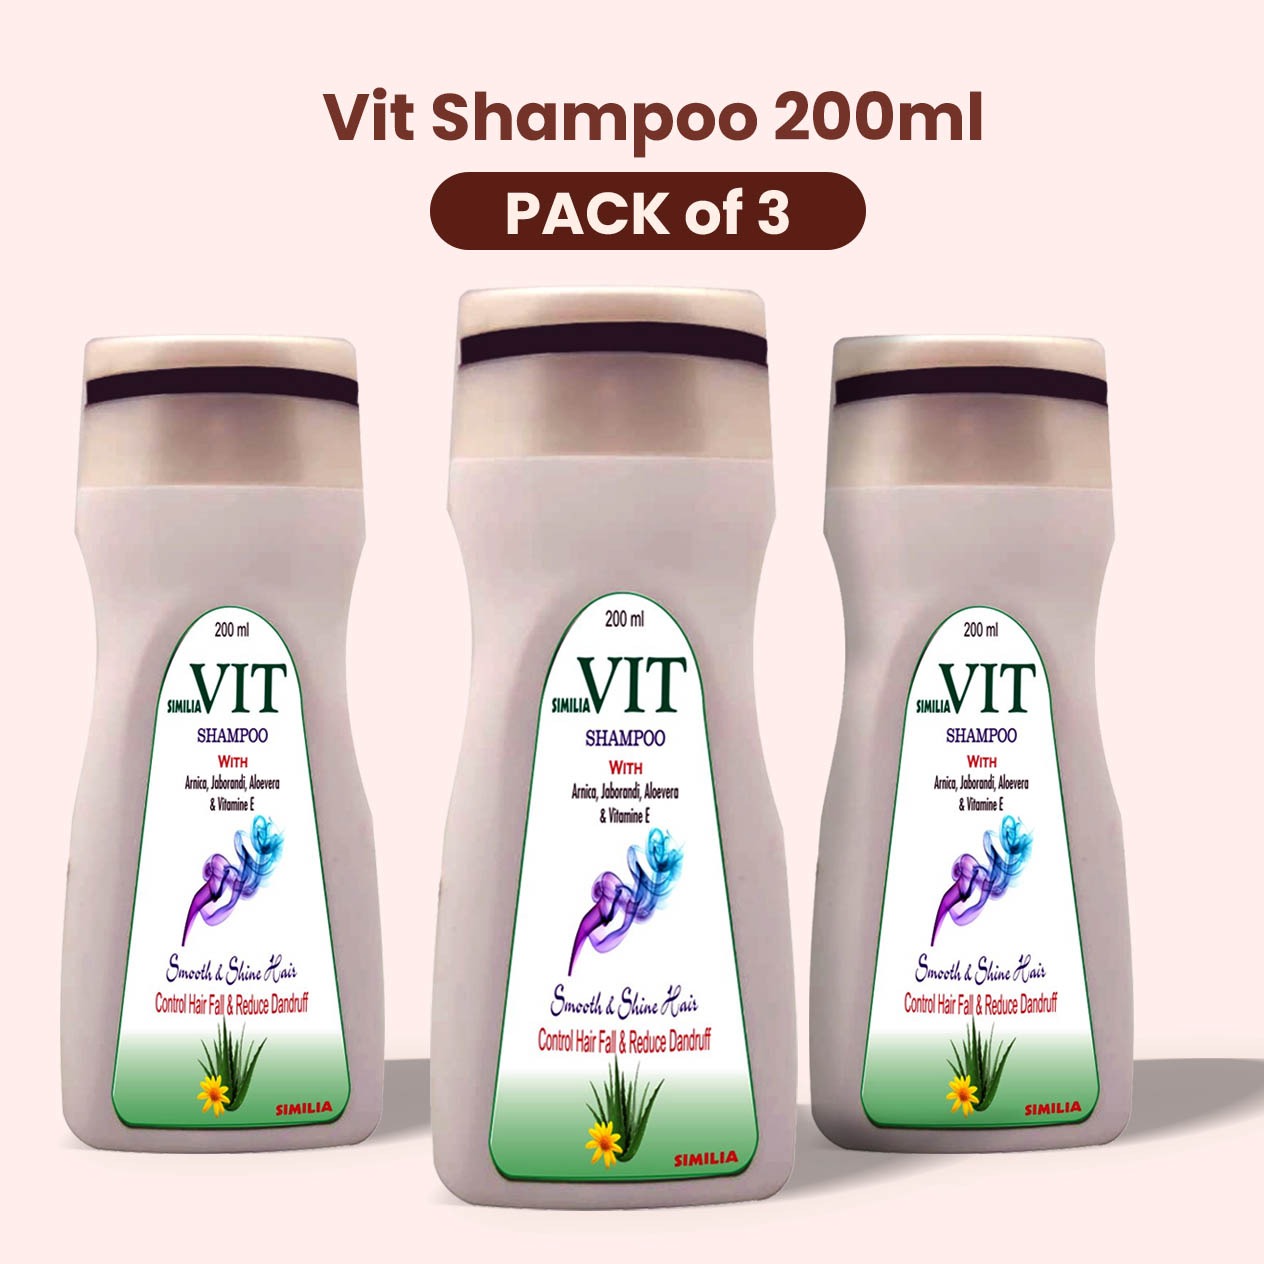 similia Vit Shampoo 200ml